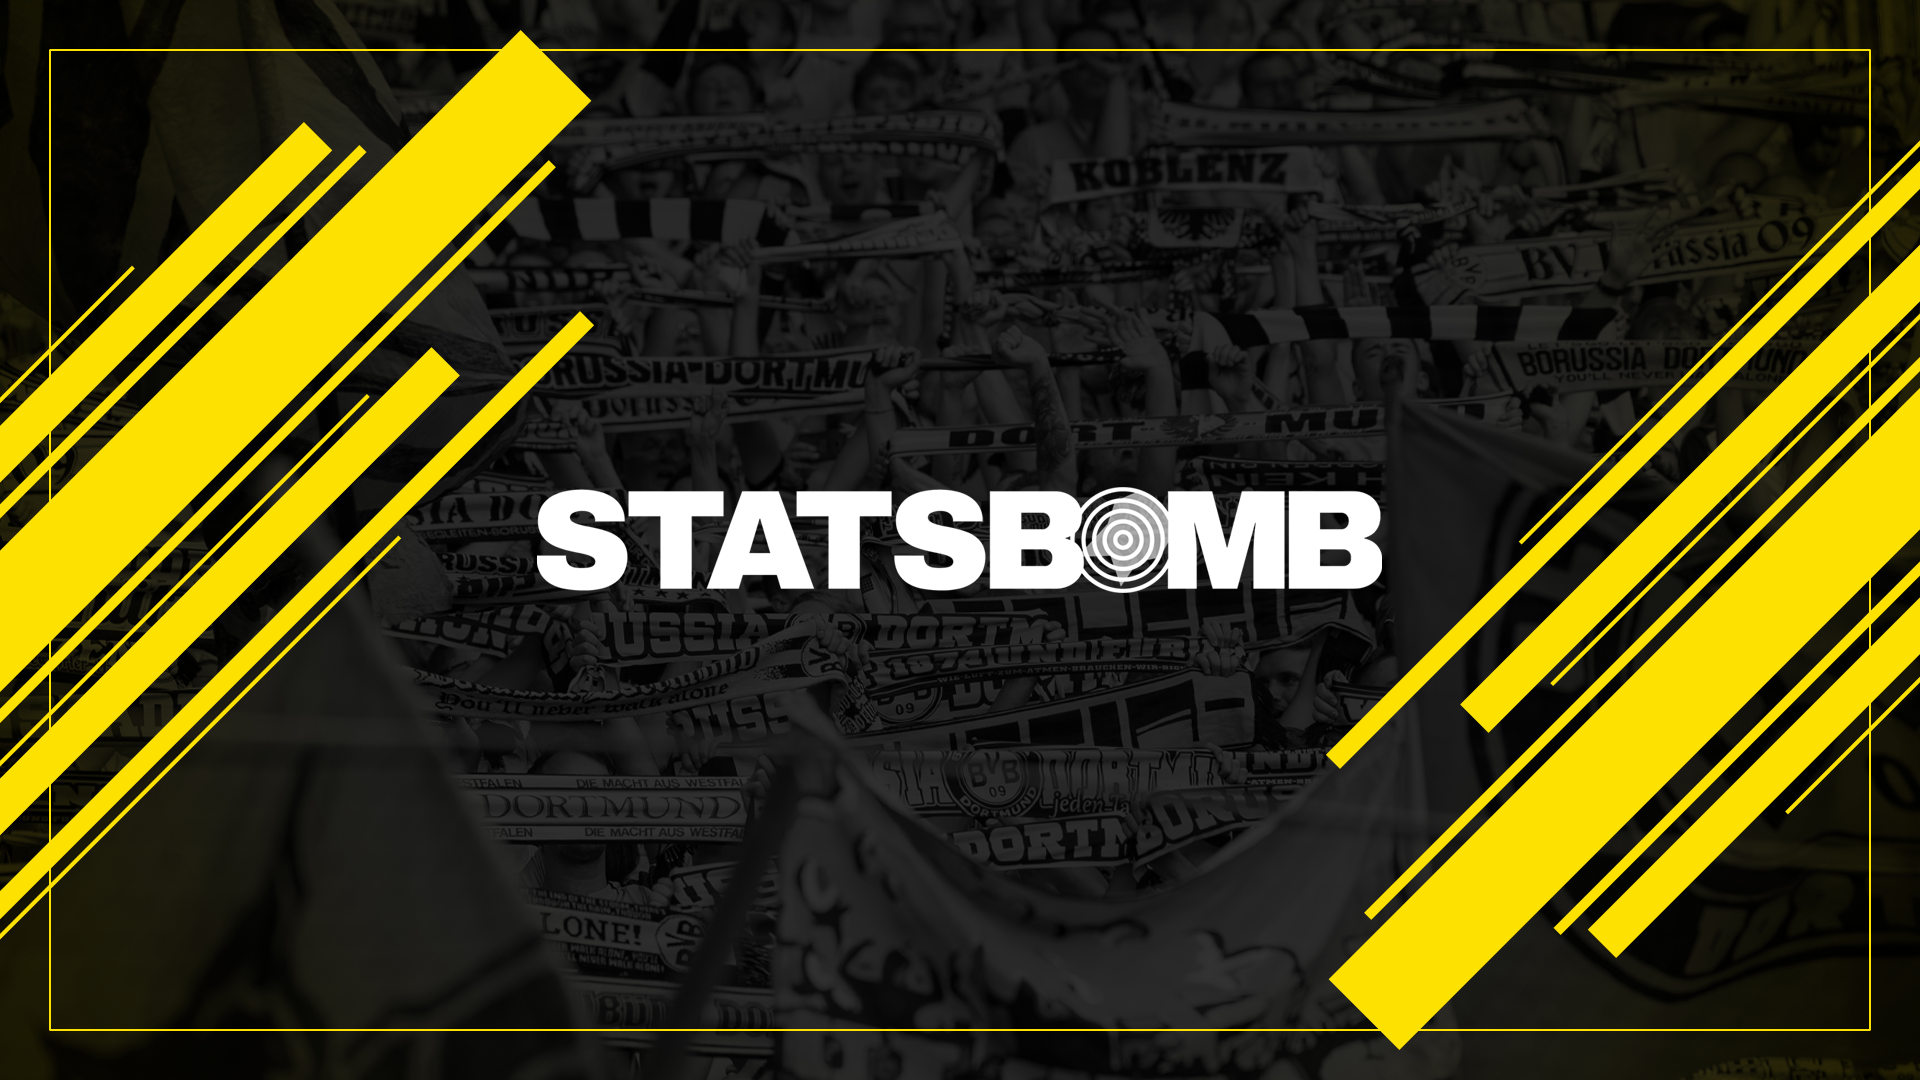 StatsBomb Agree Partnership with Borussia Dortmund